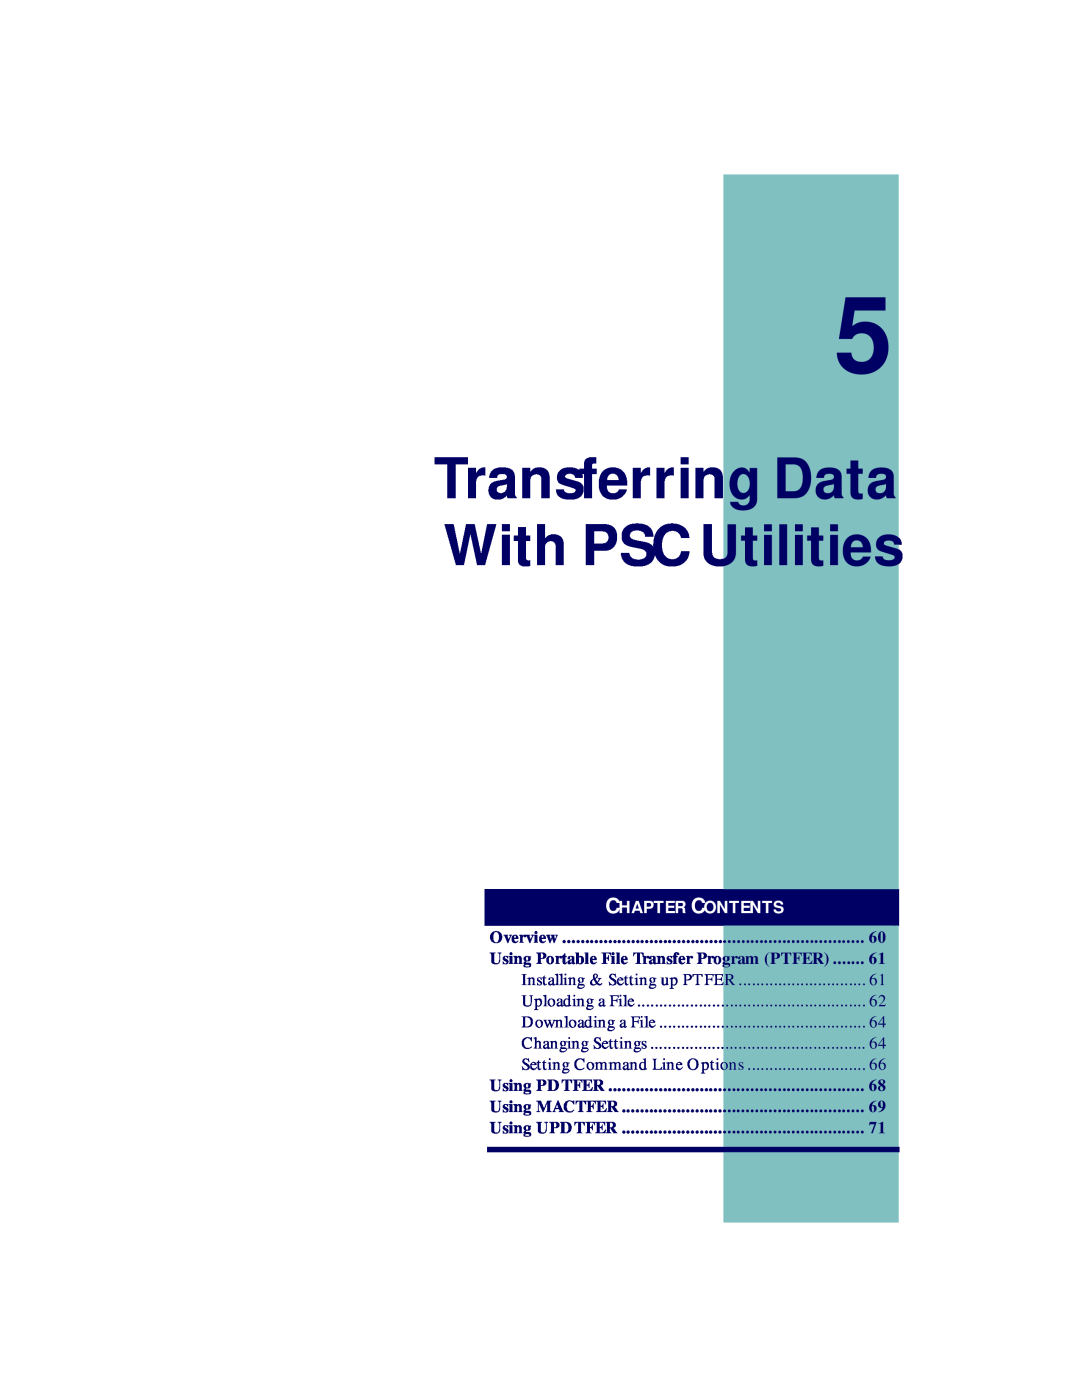 PSC PT2000, TopGun manual Transferring Data With PSC Utilities, C Hapter C Ontents 